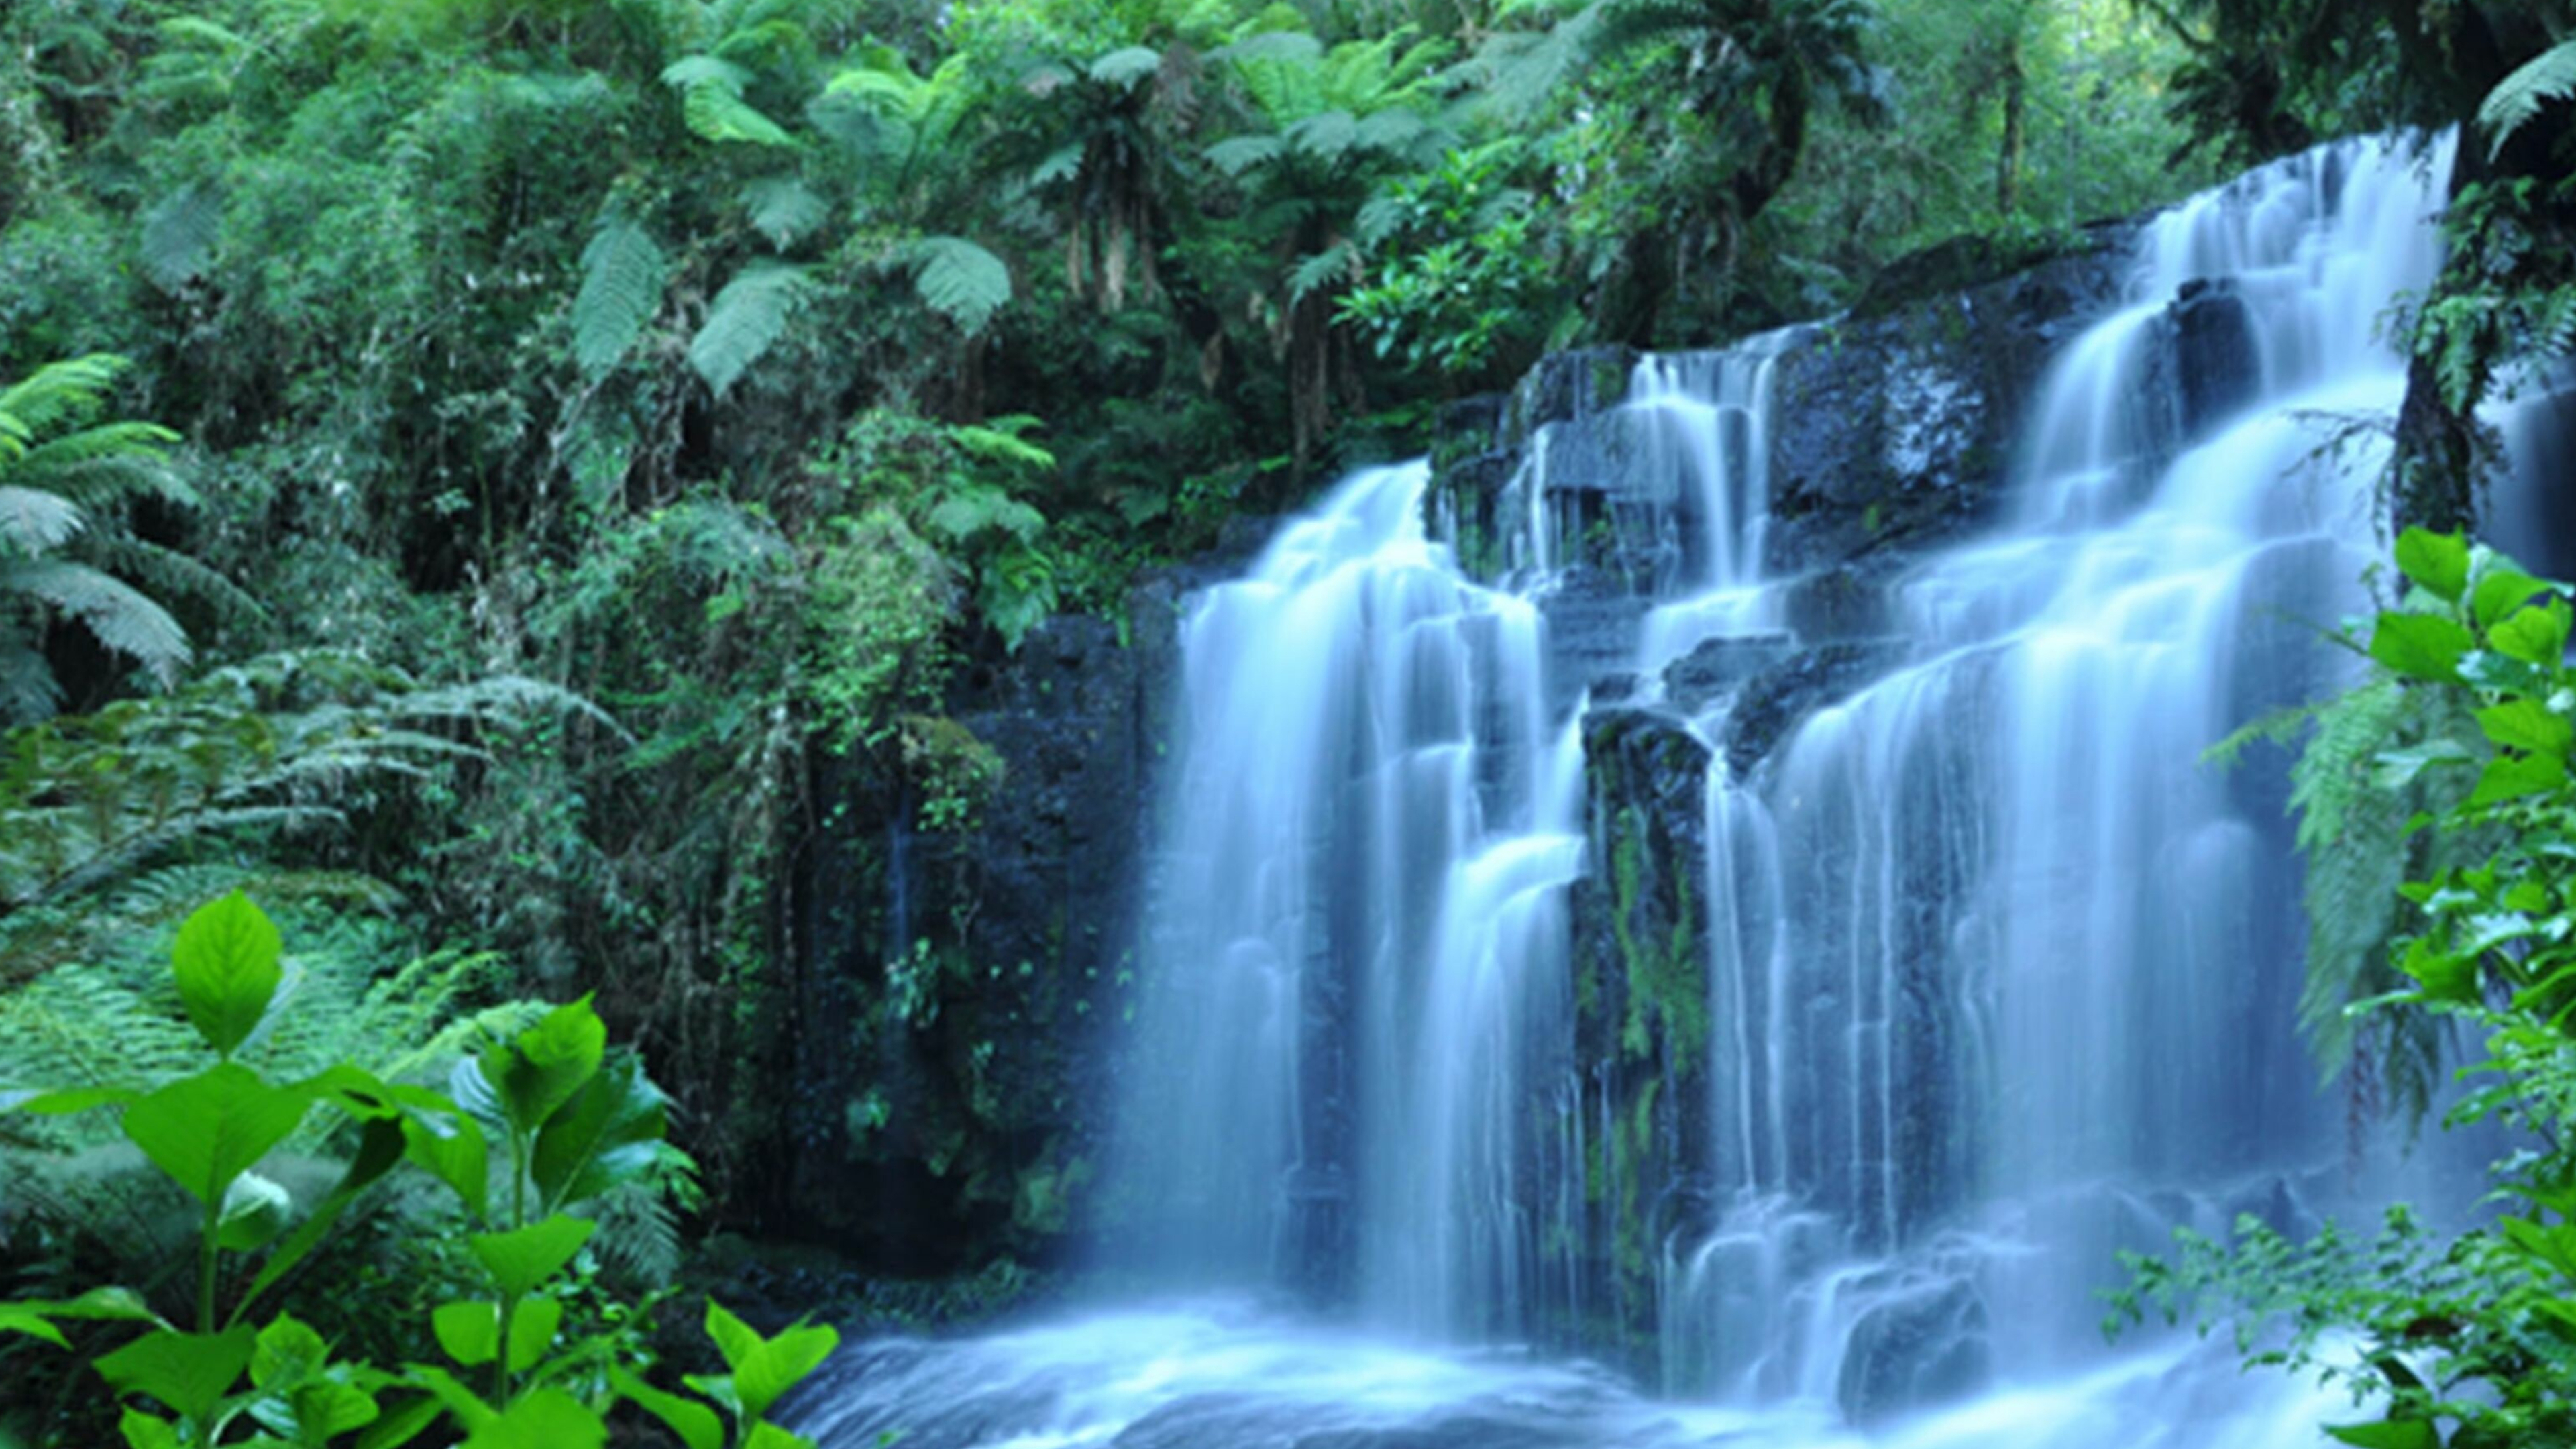 Rainforest: Tropics, Jungle, Waterfall, Natural environment. 3840x2160 4K Background.